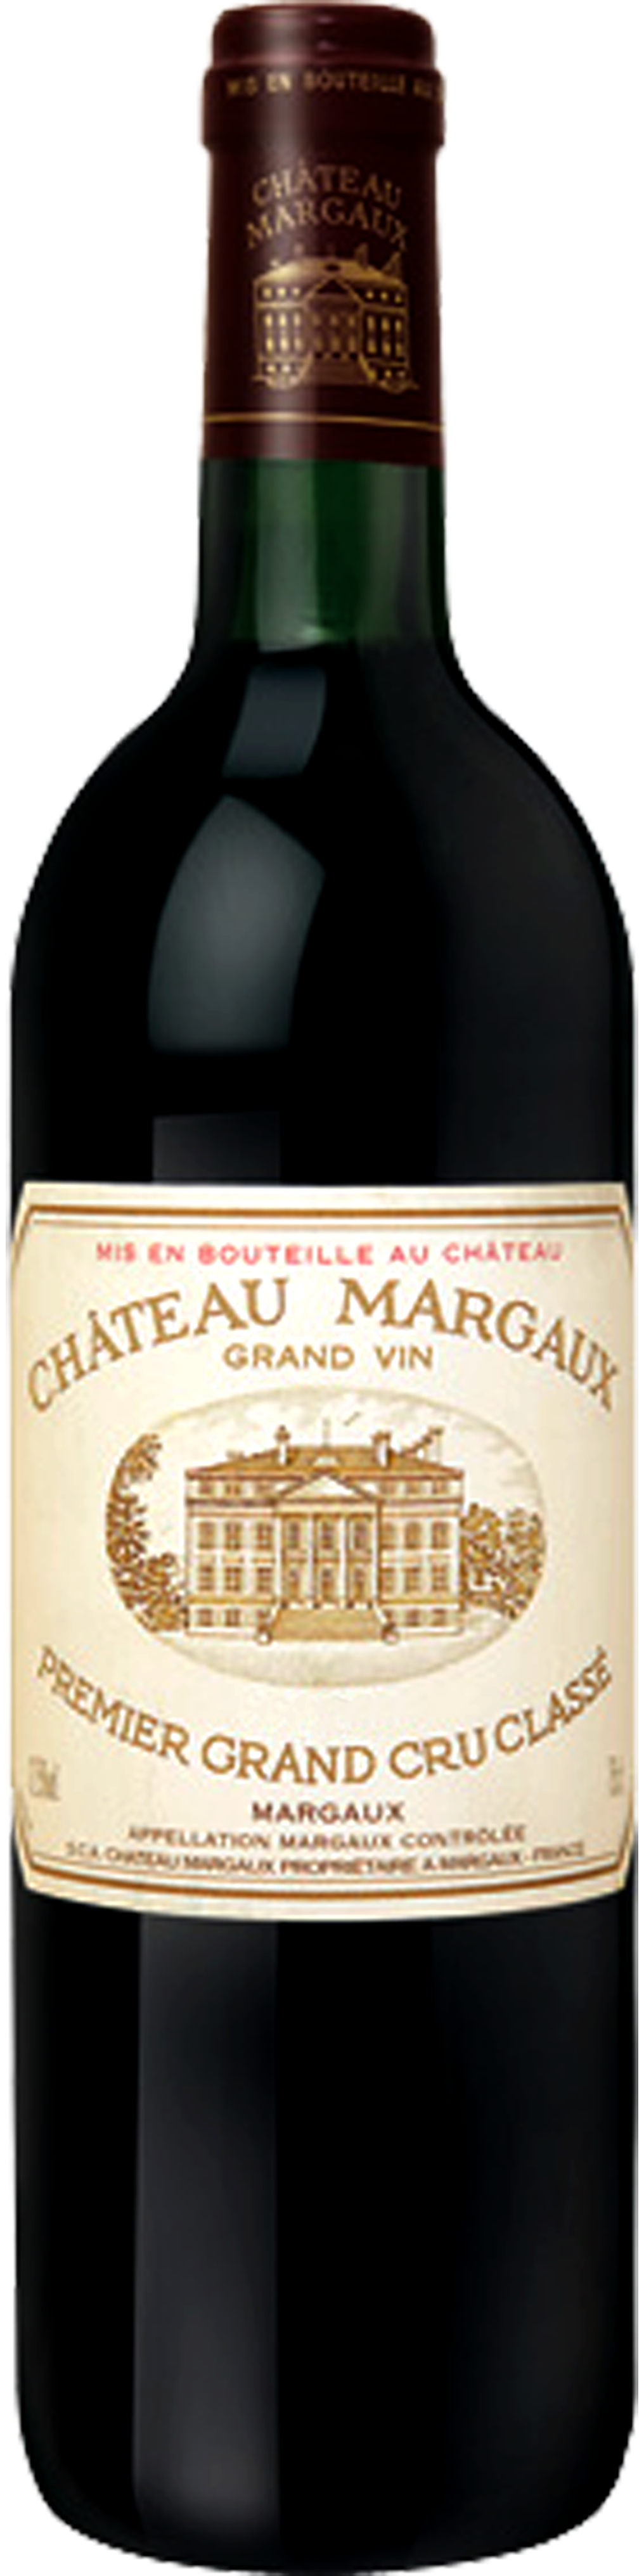 Image of product Château Margaux, 1er Cru Margaux